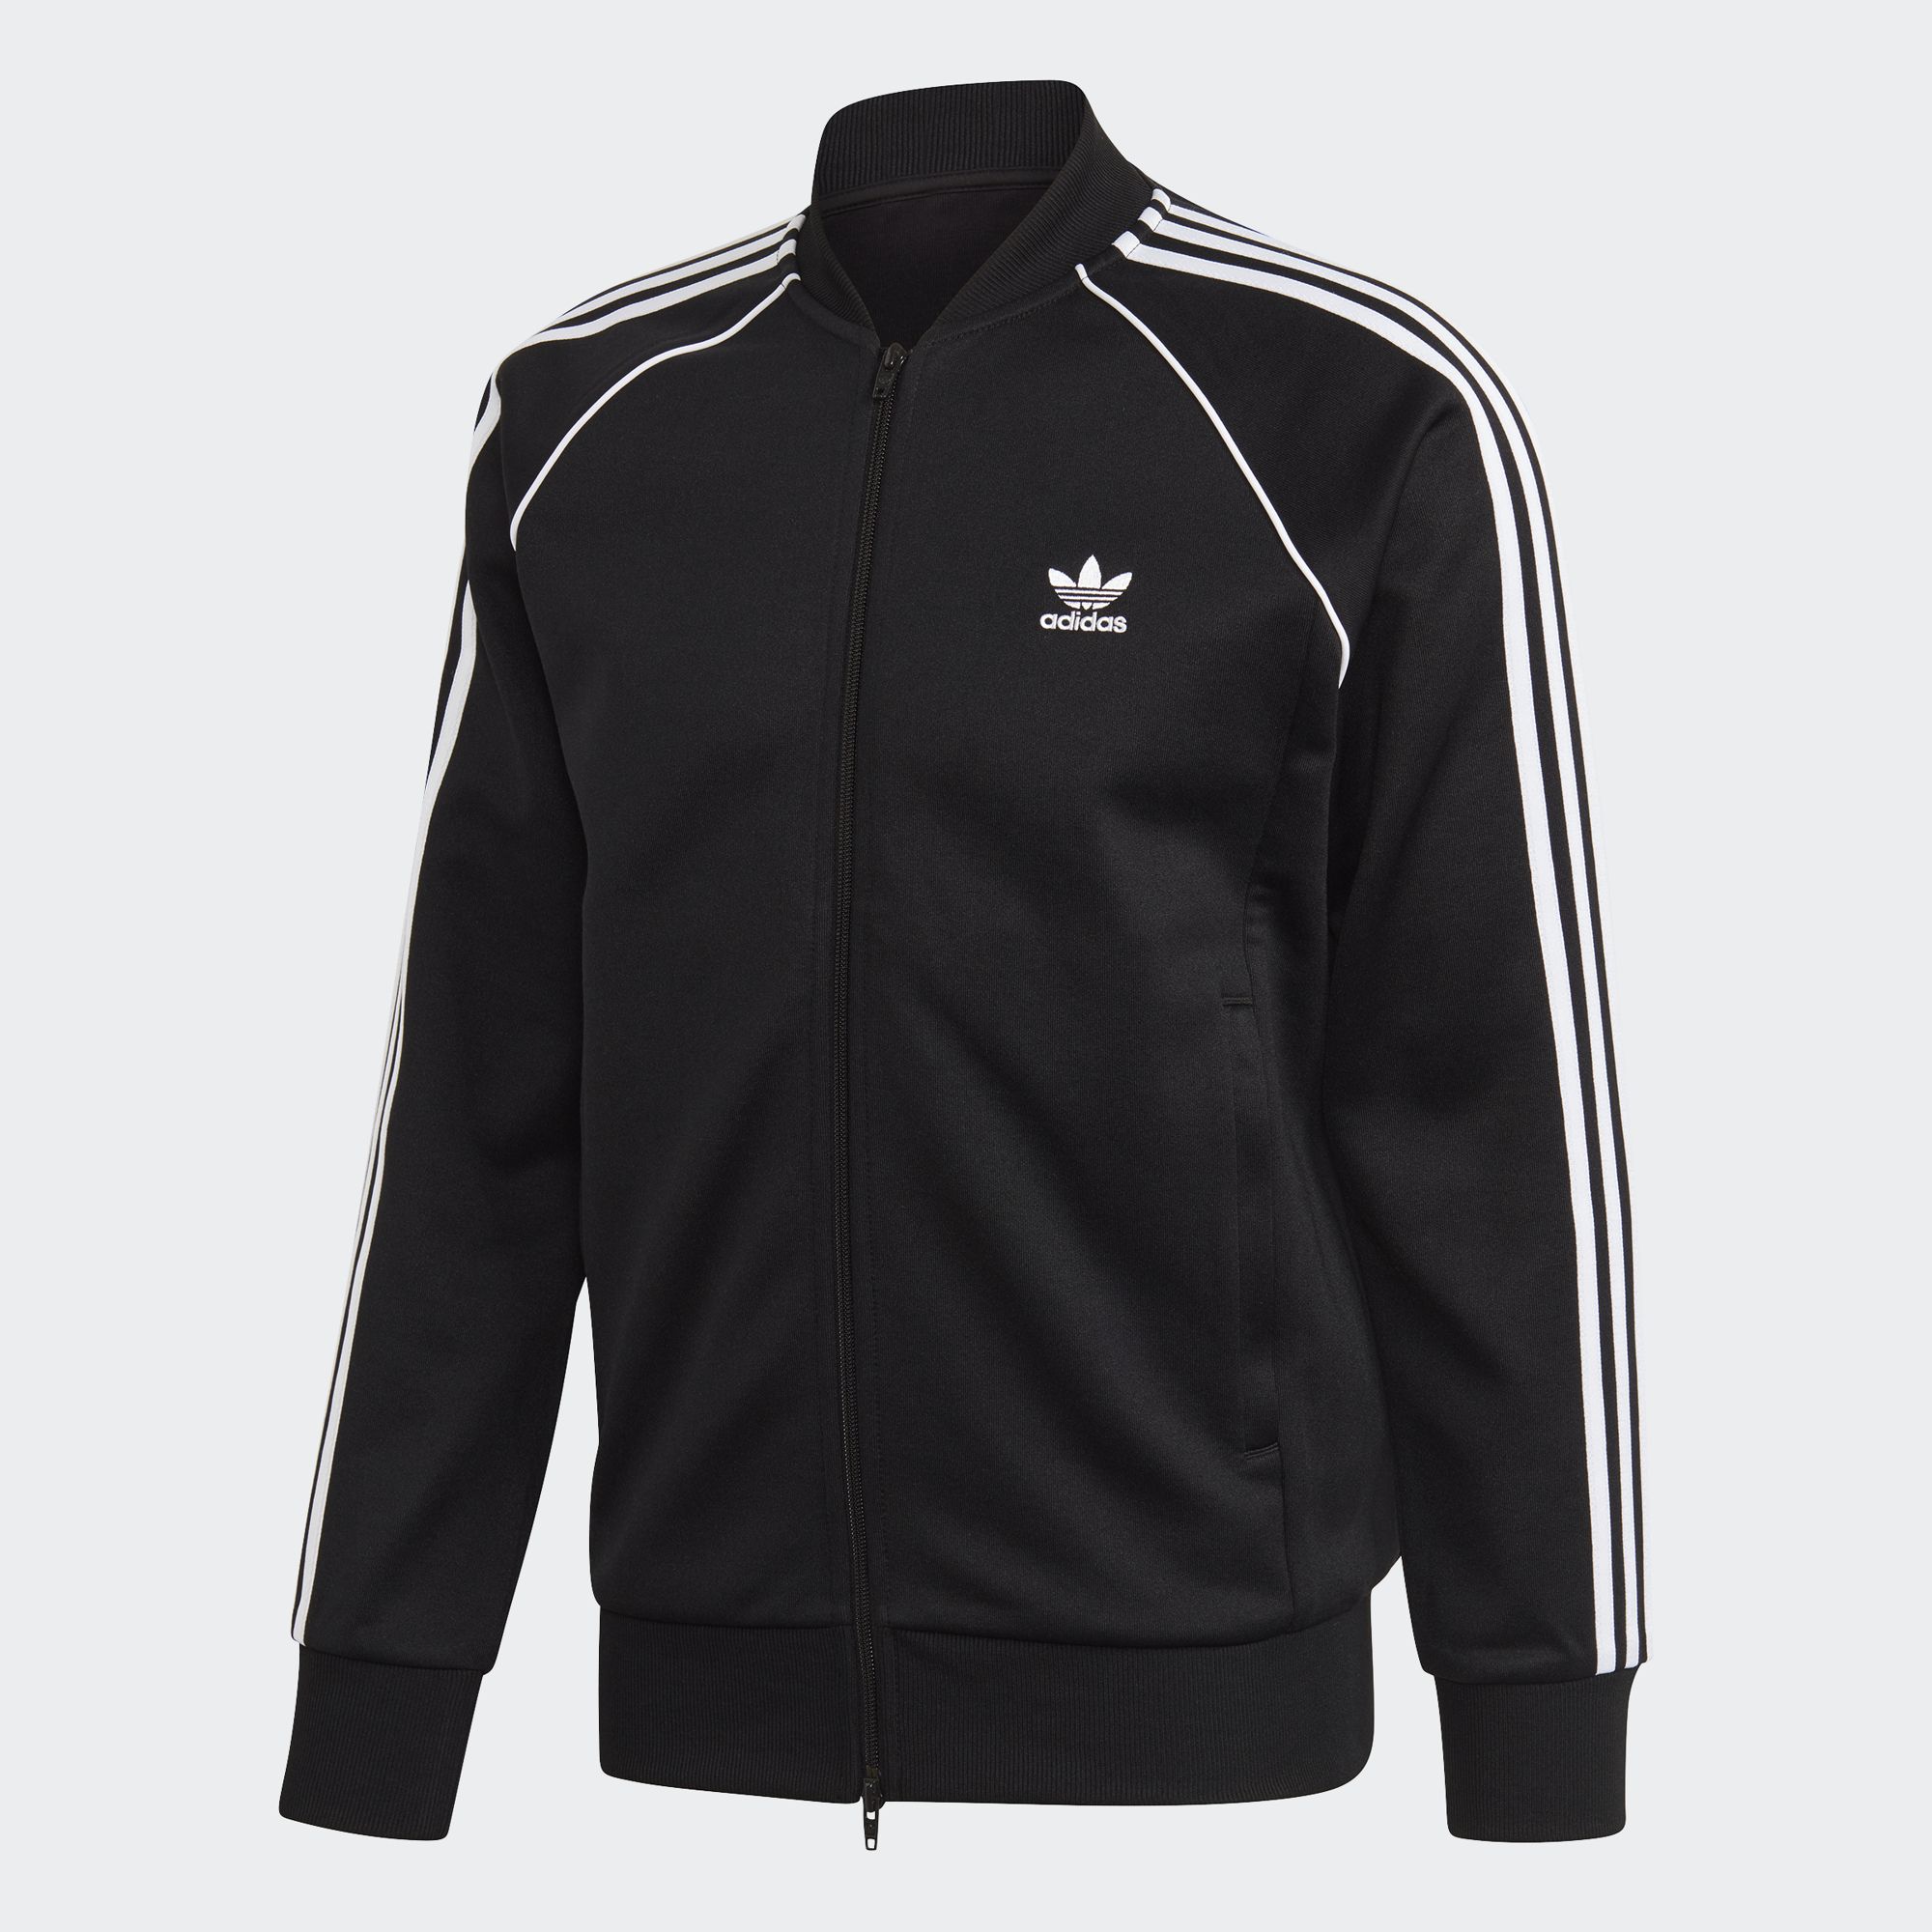 black and white adidas jacket mens